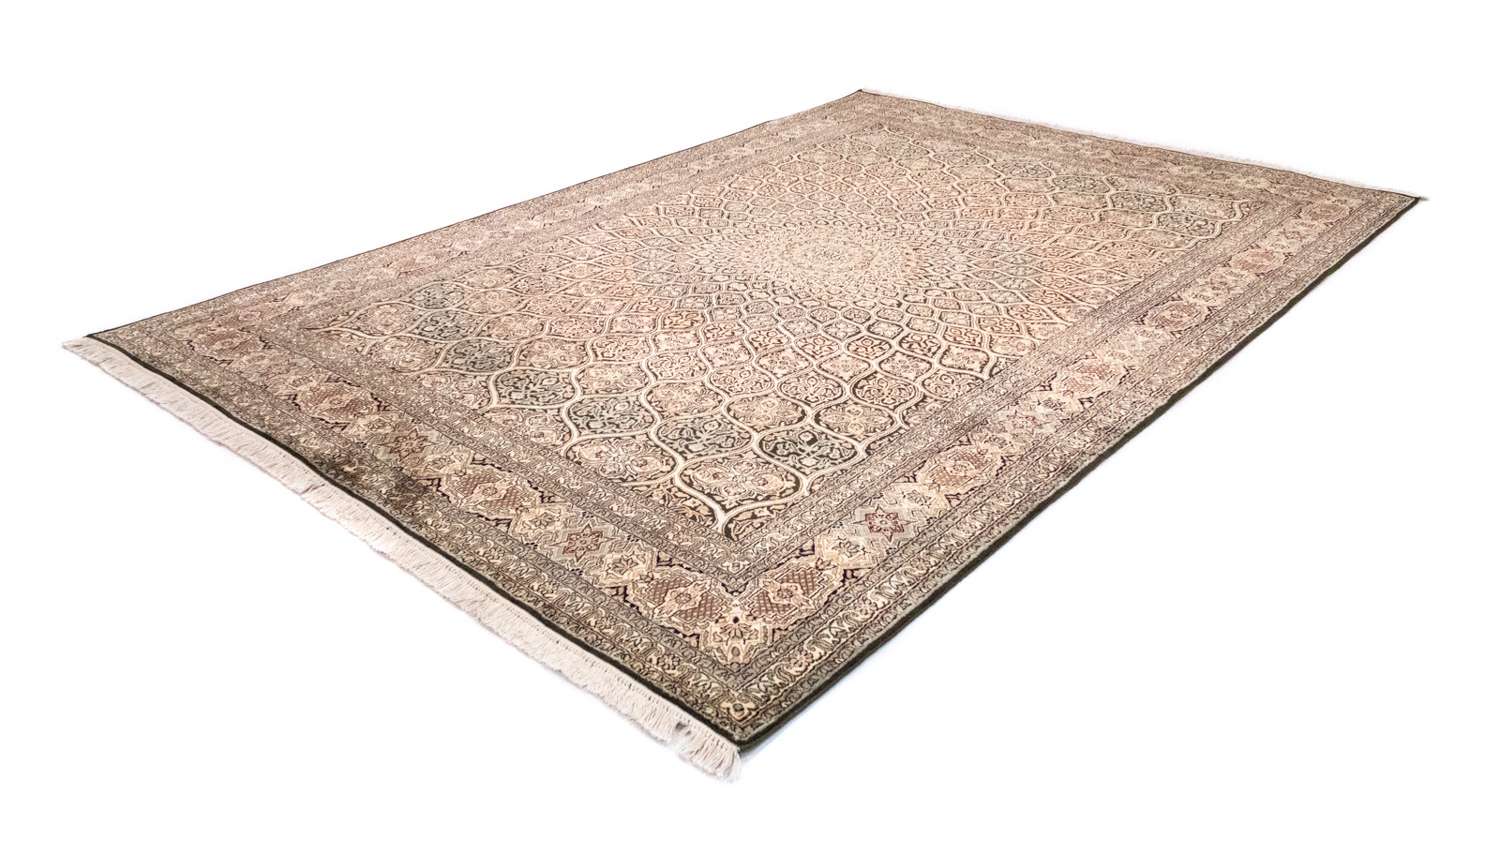 Silketeppe - Kashmir silke - 280 x 185 cm - brun